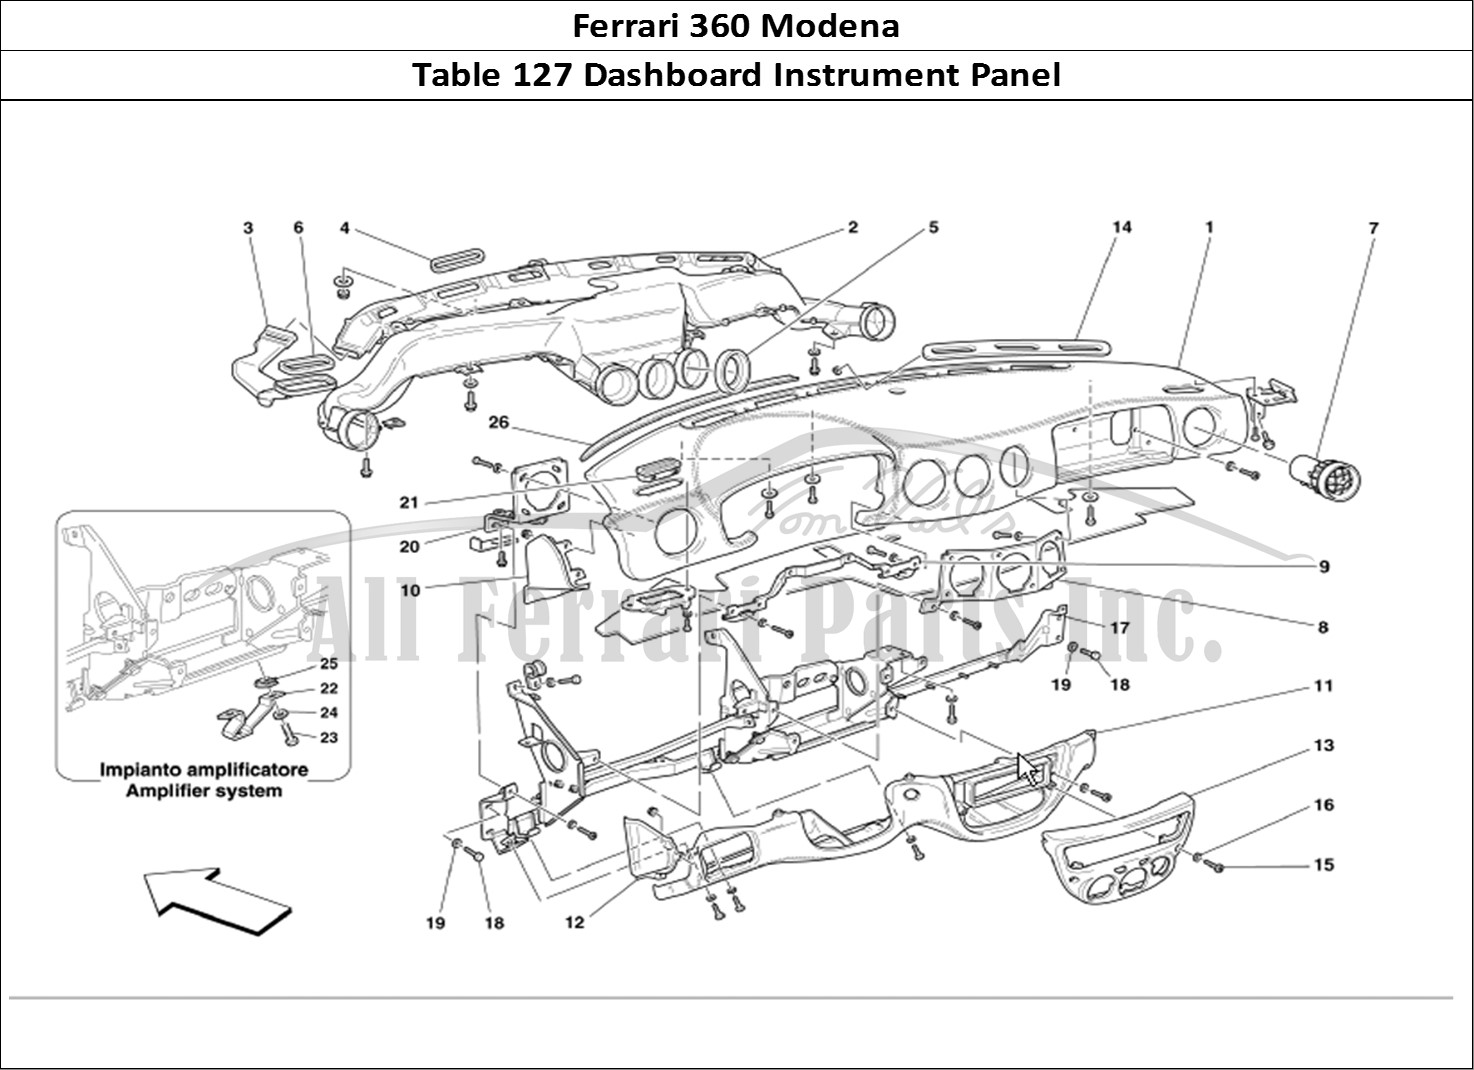 Ferrari Parts Ferrari 360 Modena Page 127 Dashboard